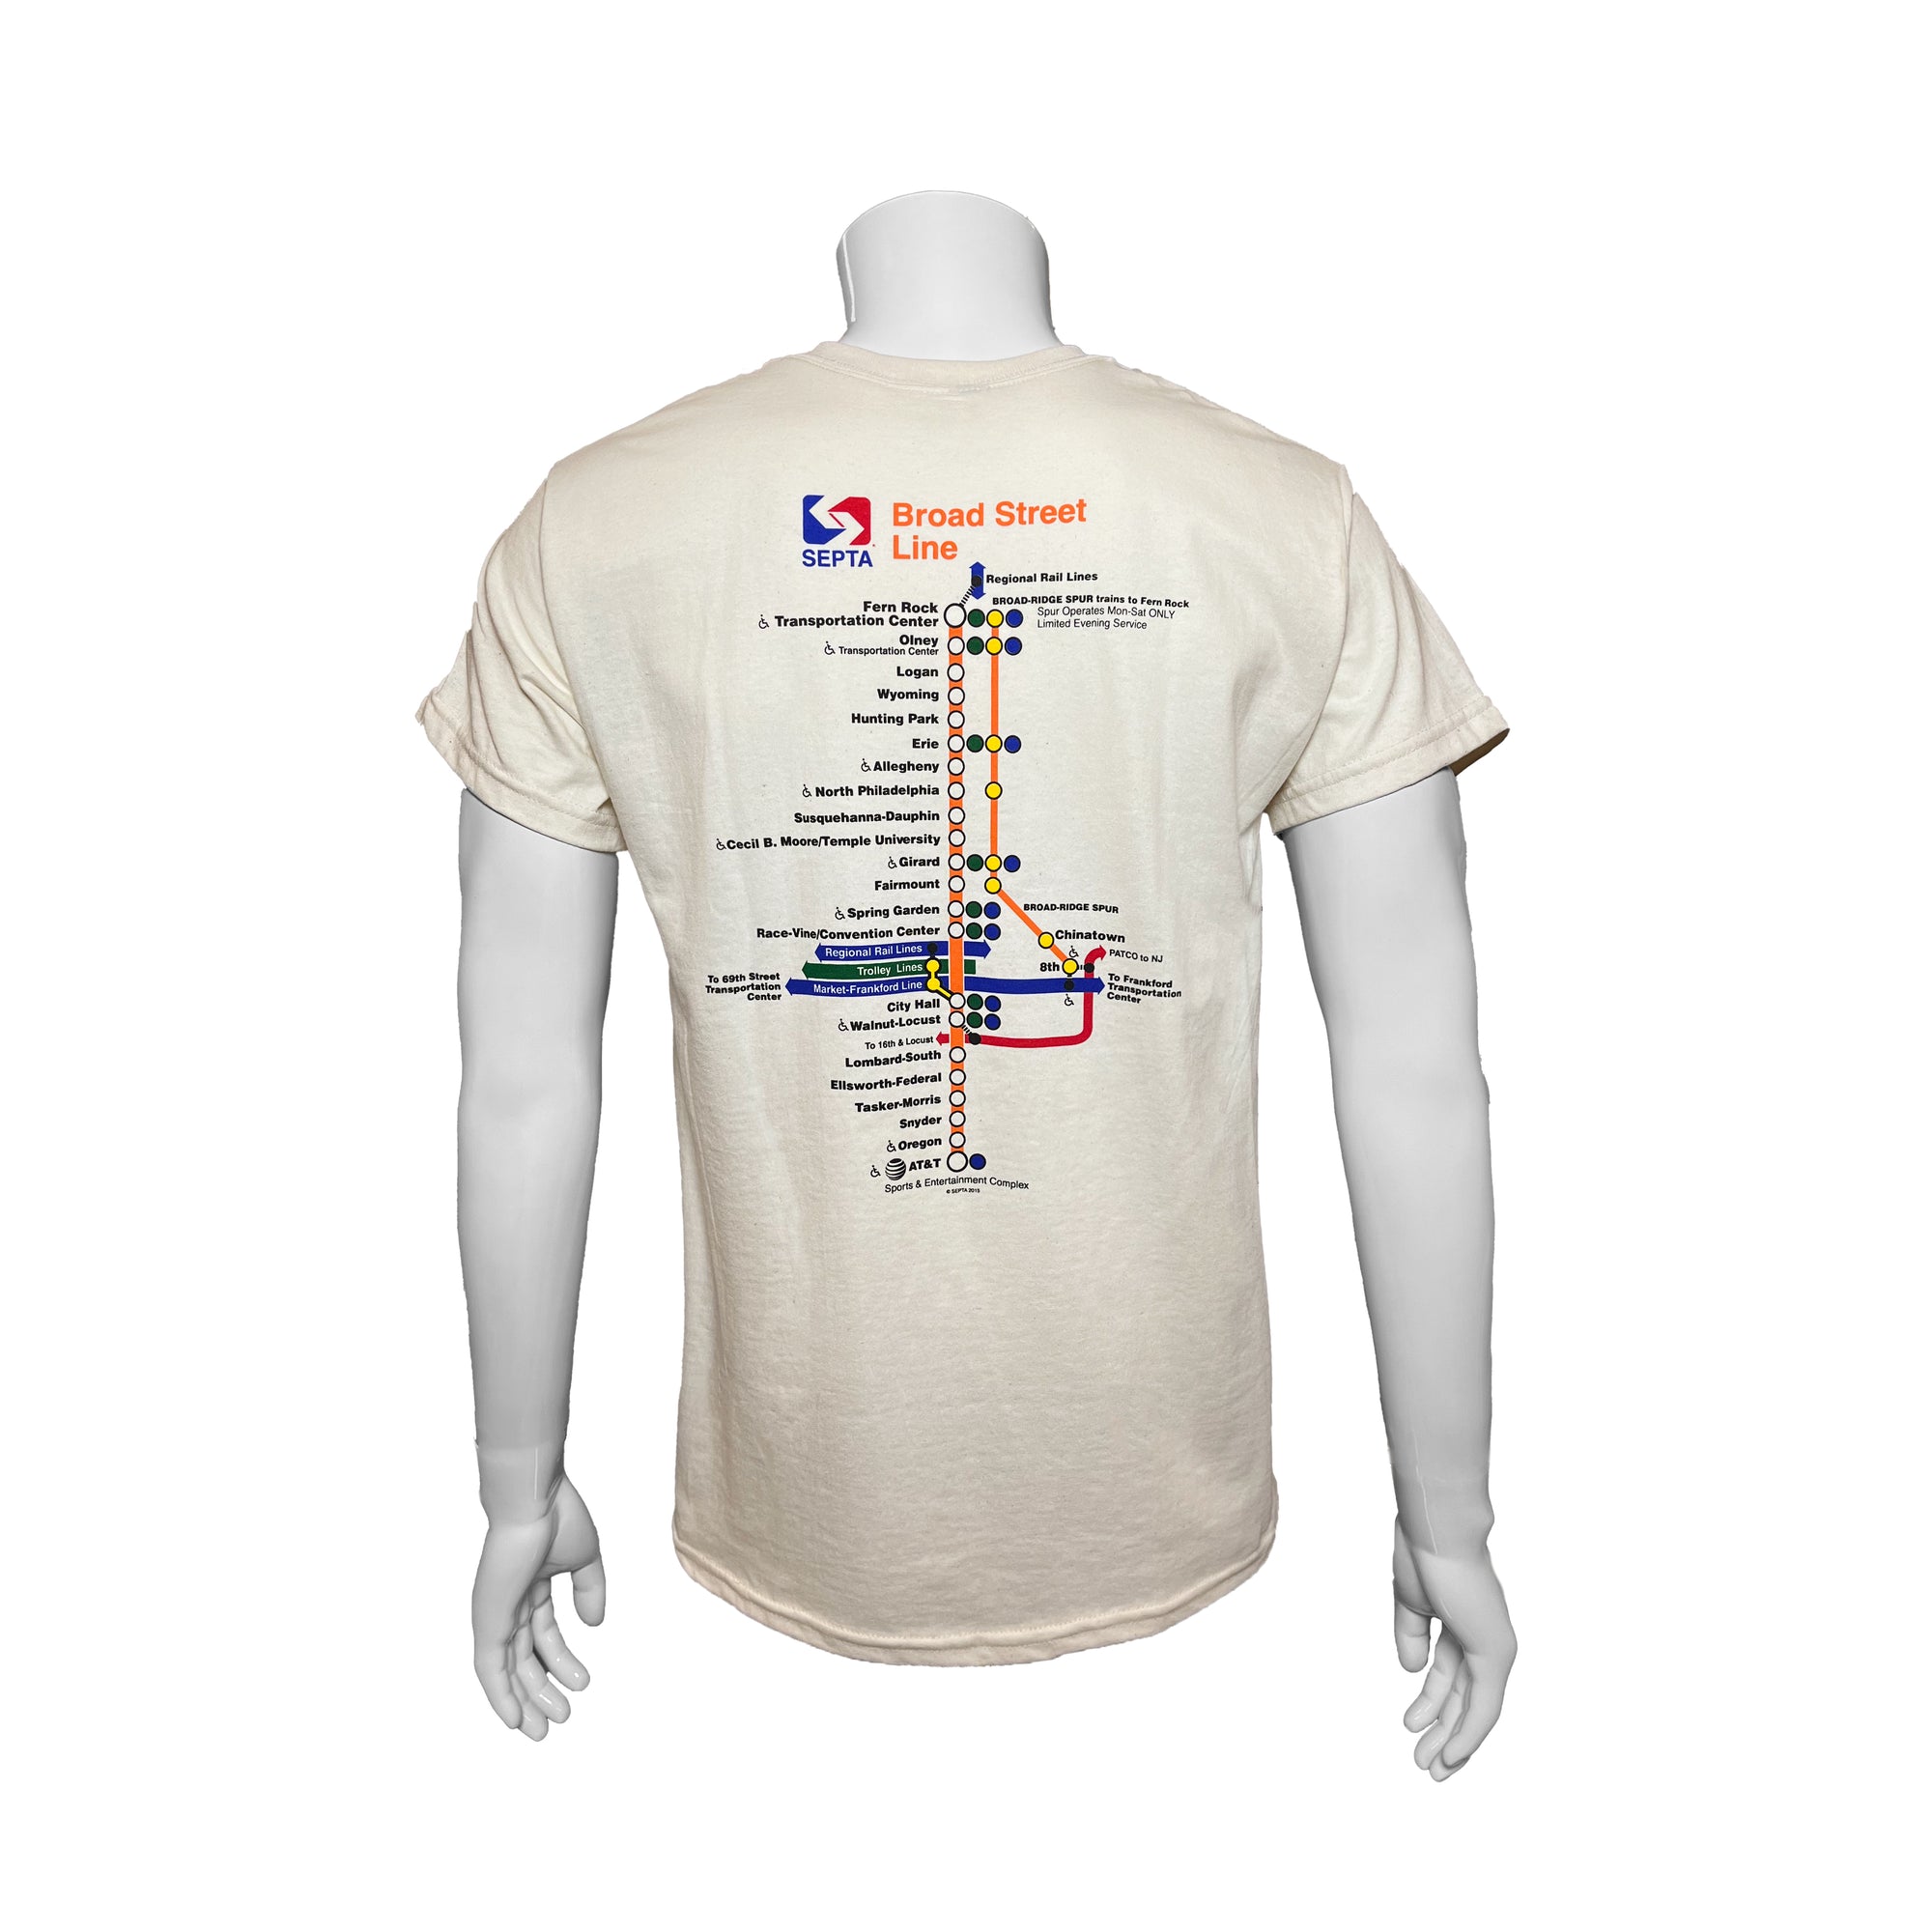 Broad Street Line T-Shirt